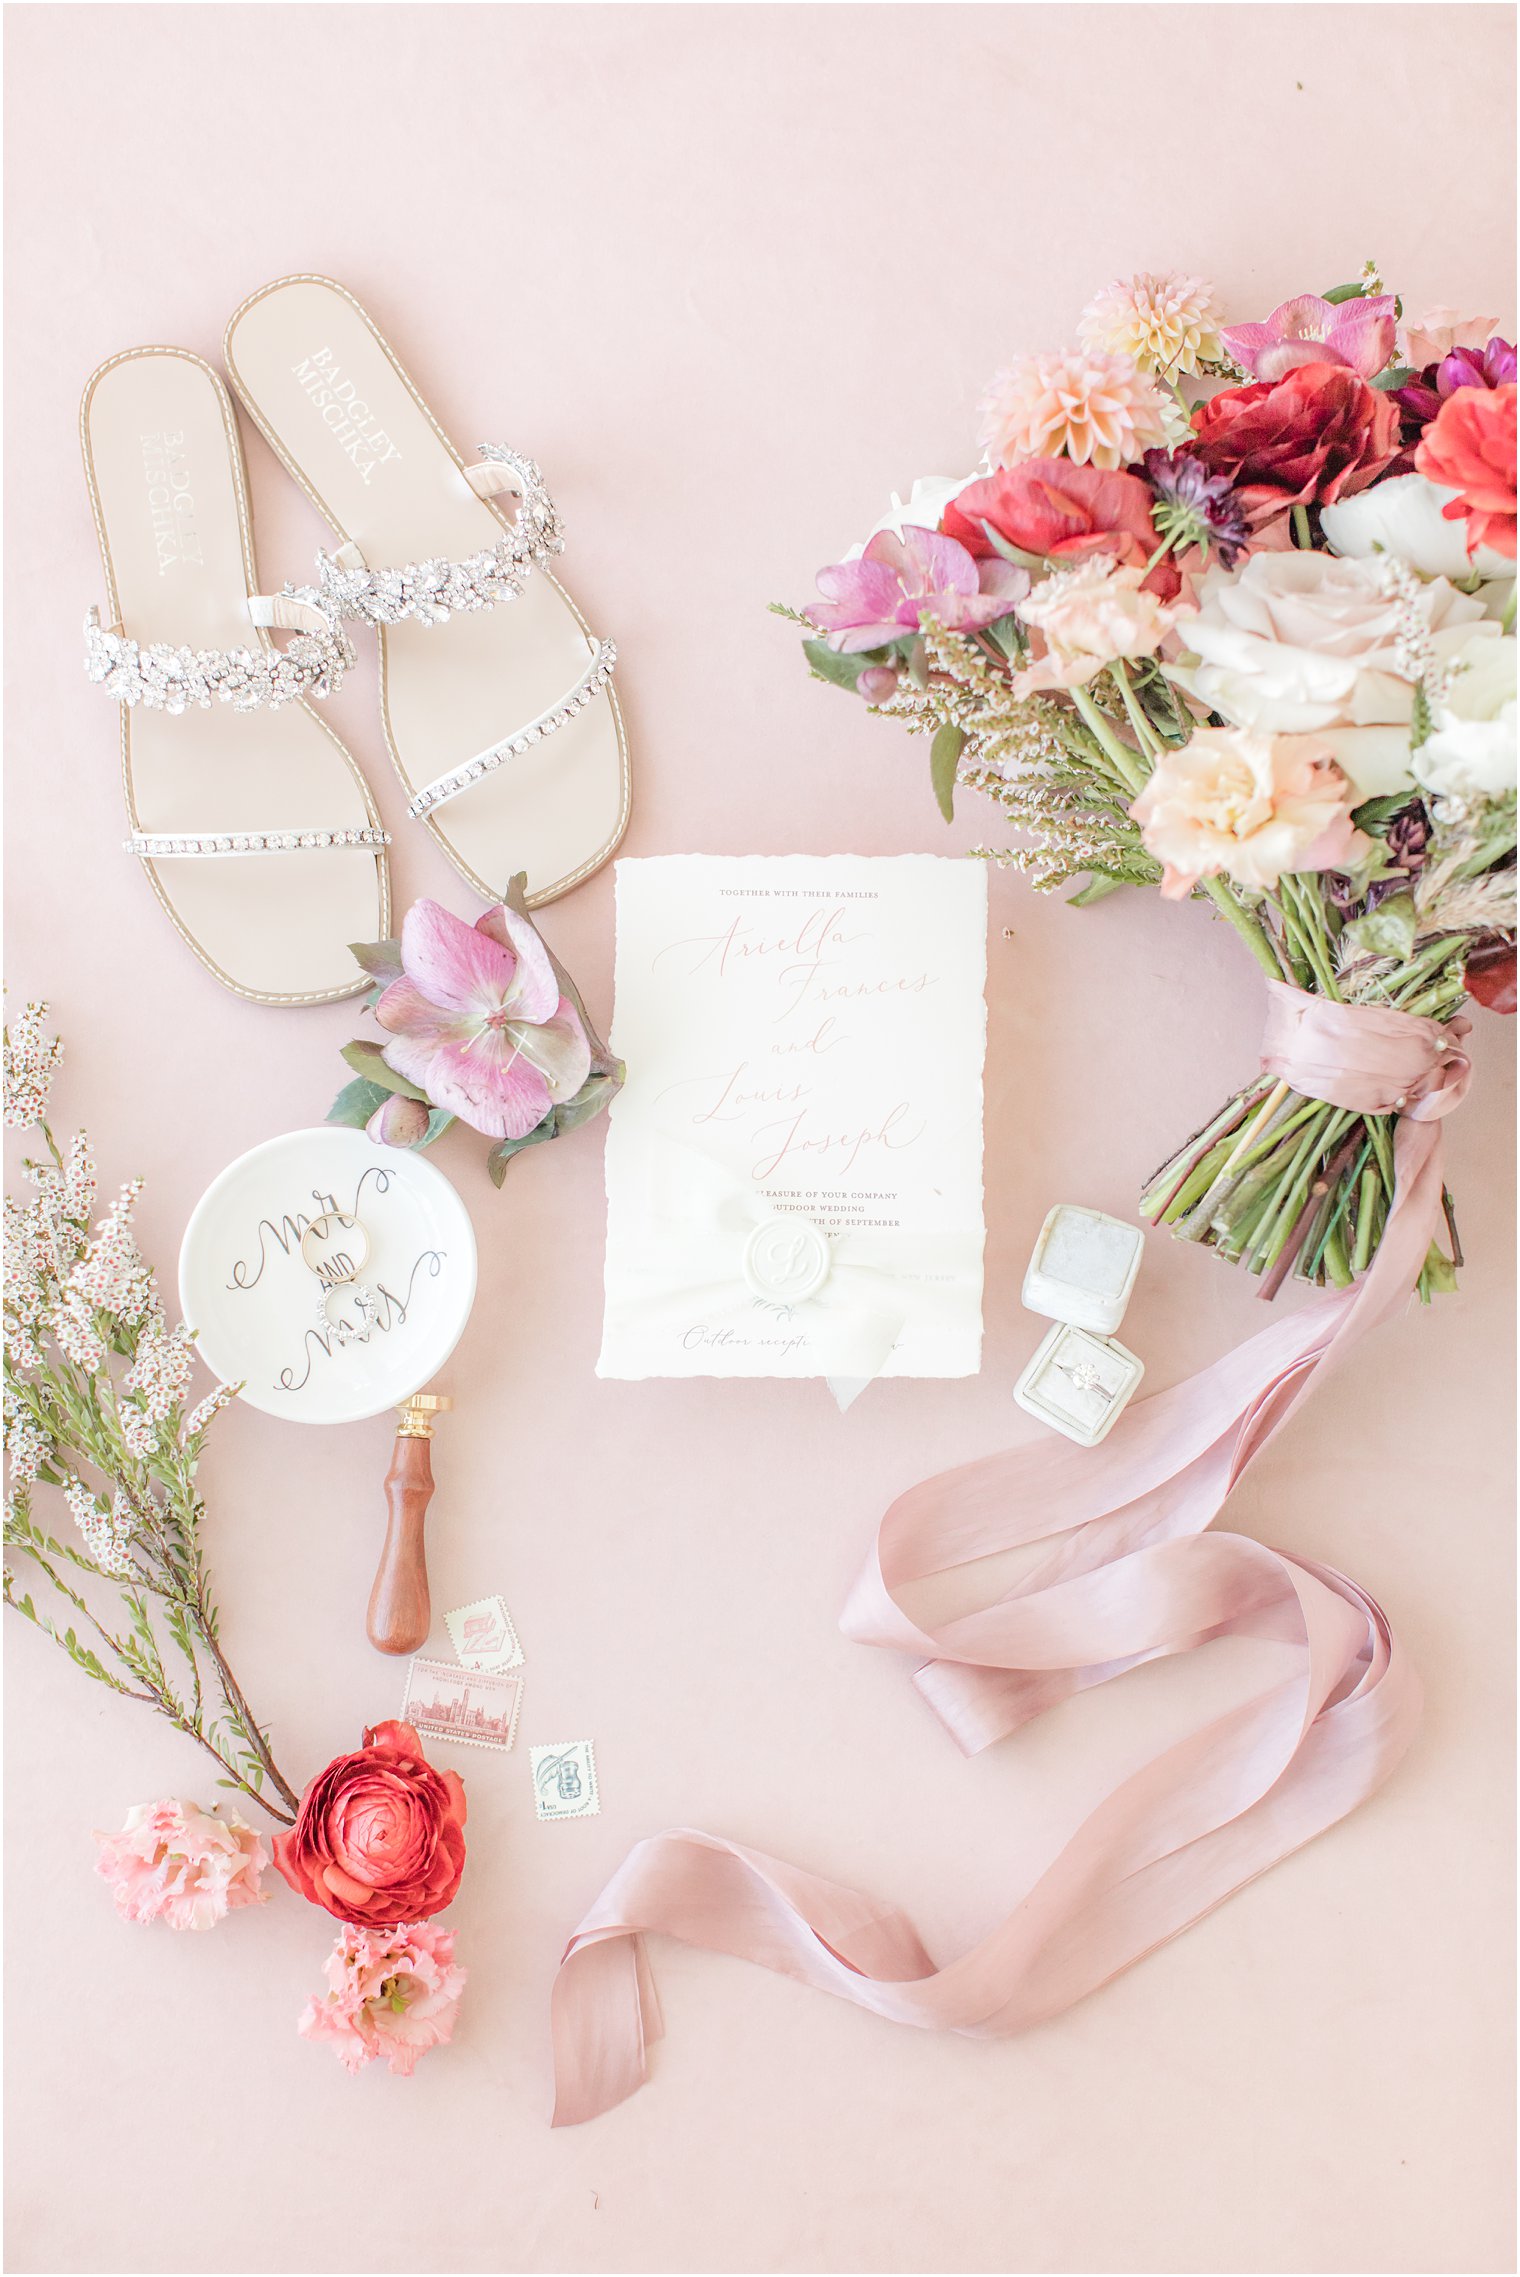 wedding details in pink flatlay